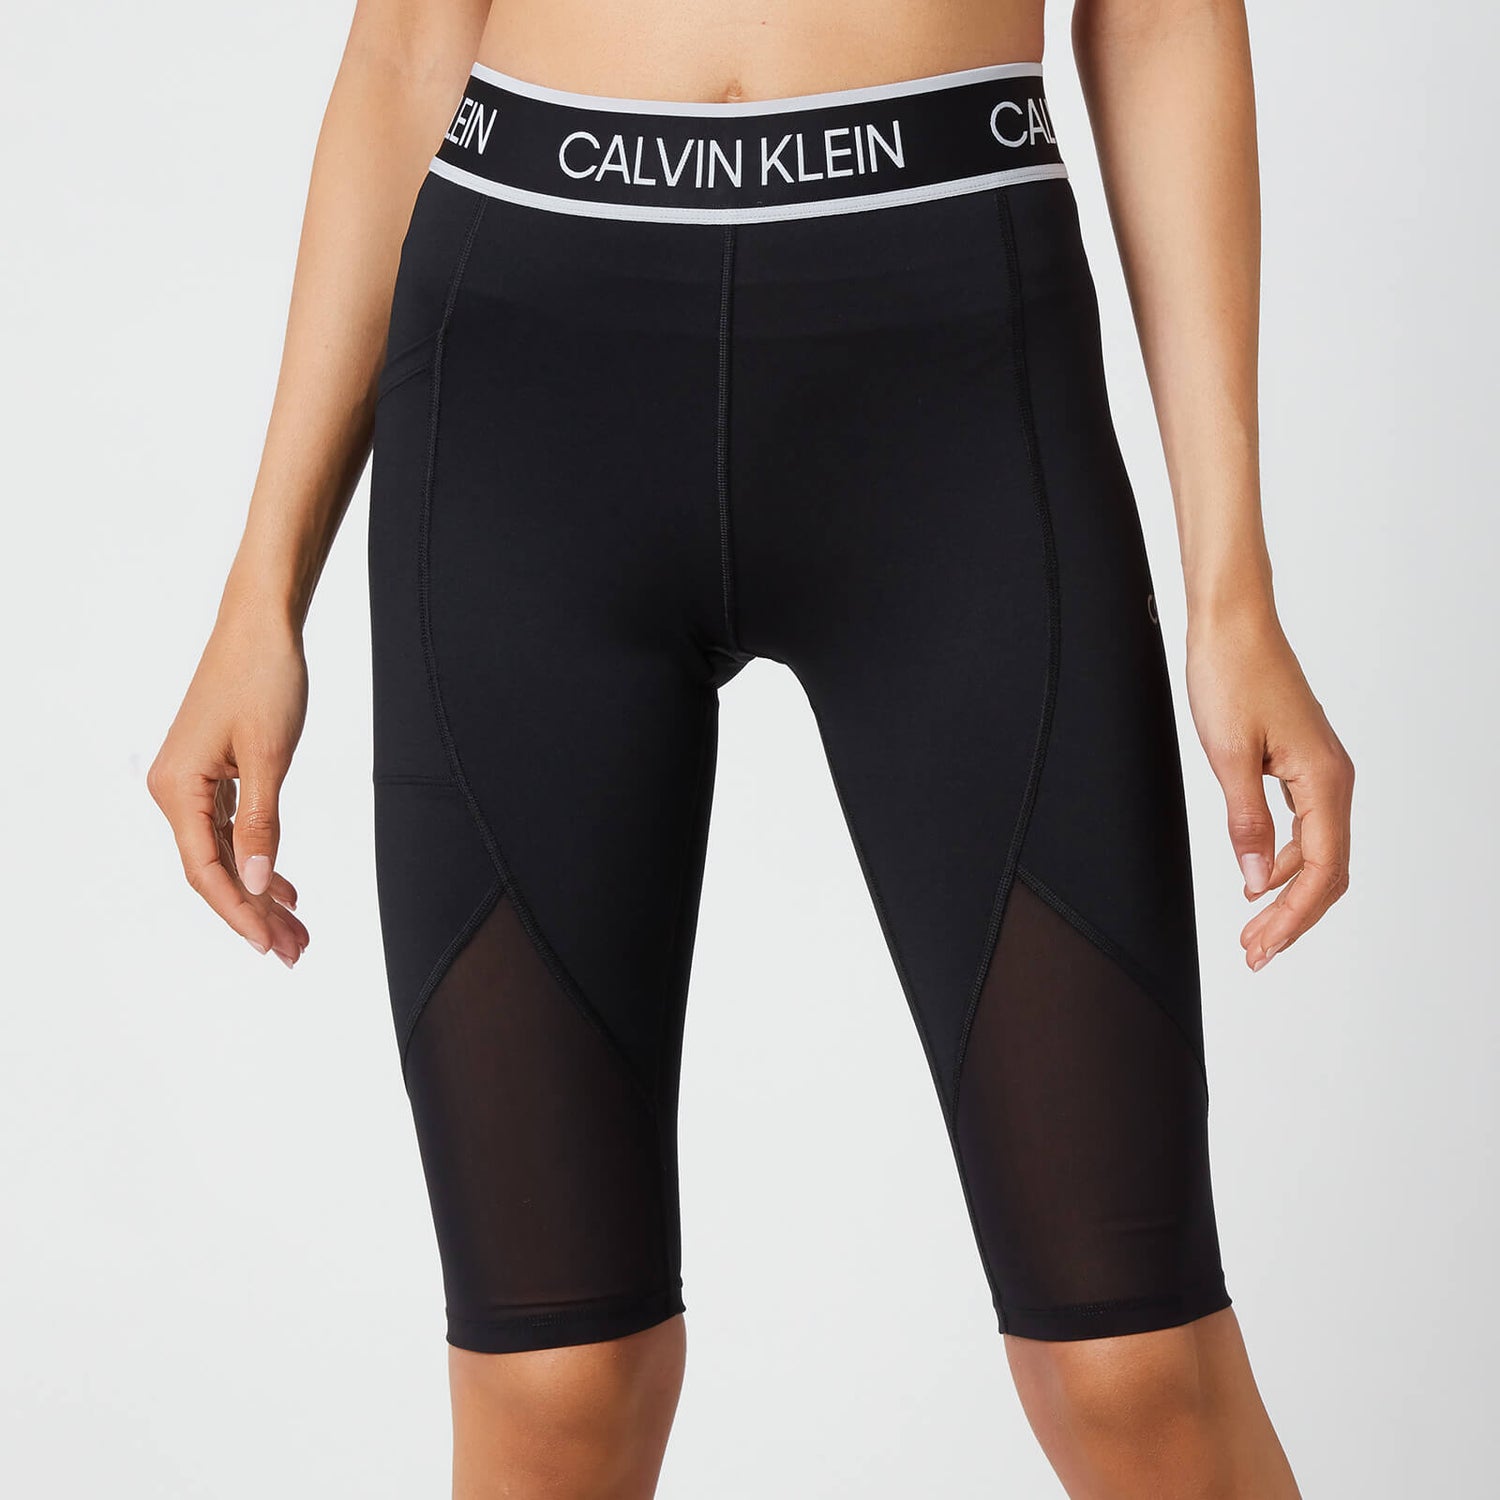 Calvin Klein Performance Women's Short Tights - CK Black